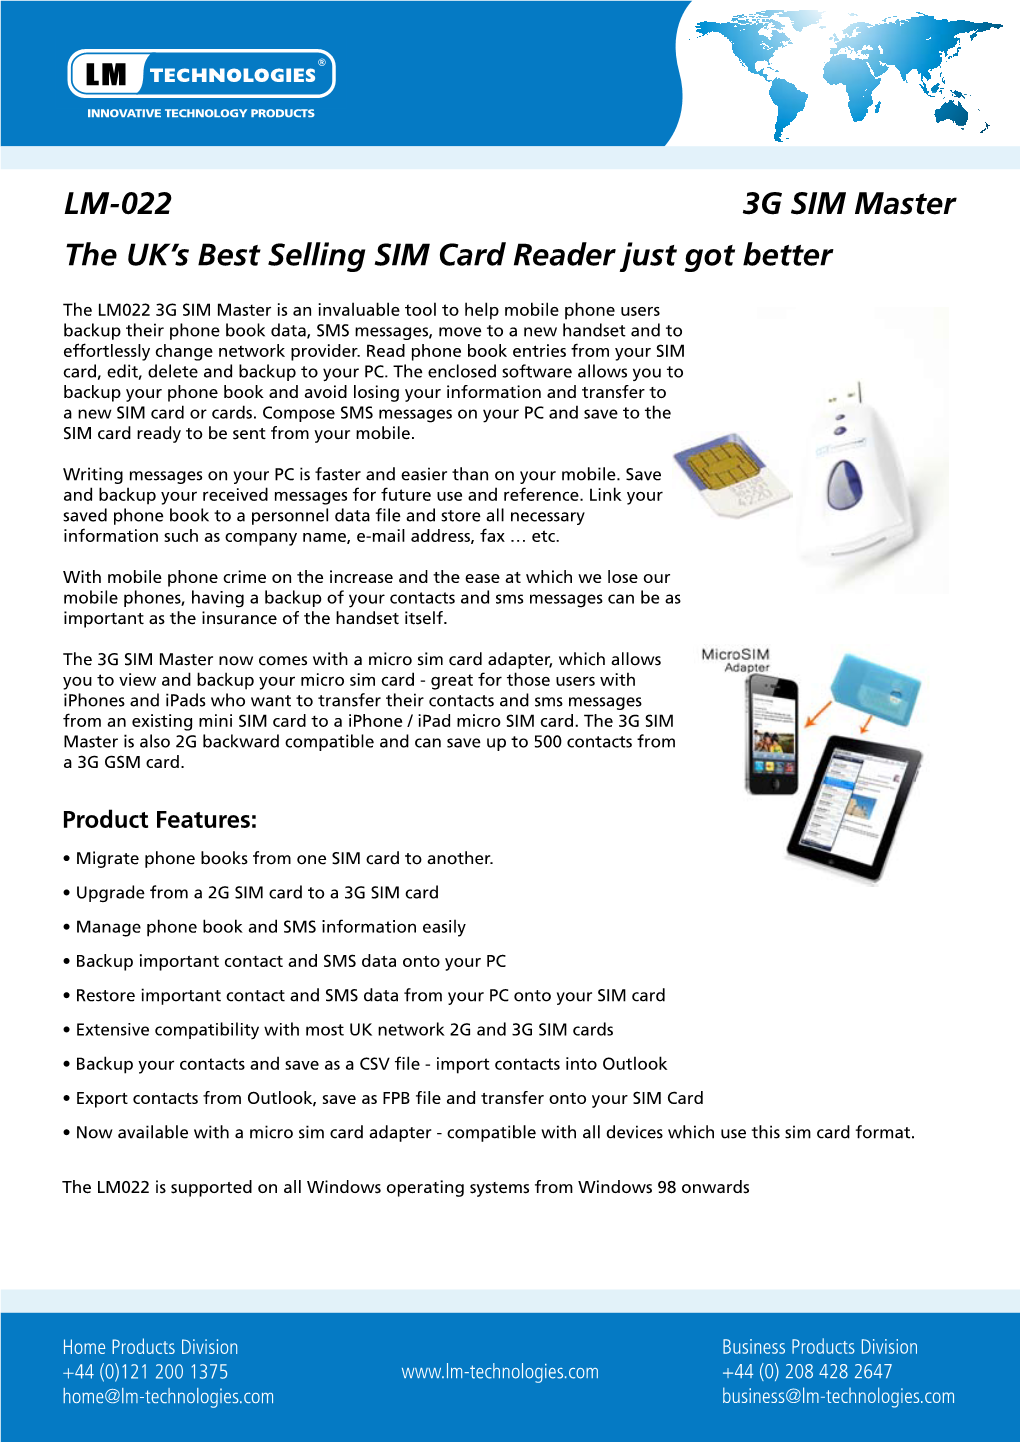 LM-022 3G SIM Master the UK's Best Selling SIM Card Reader Just Got